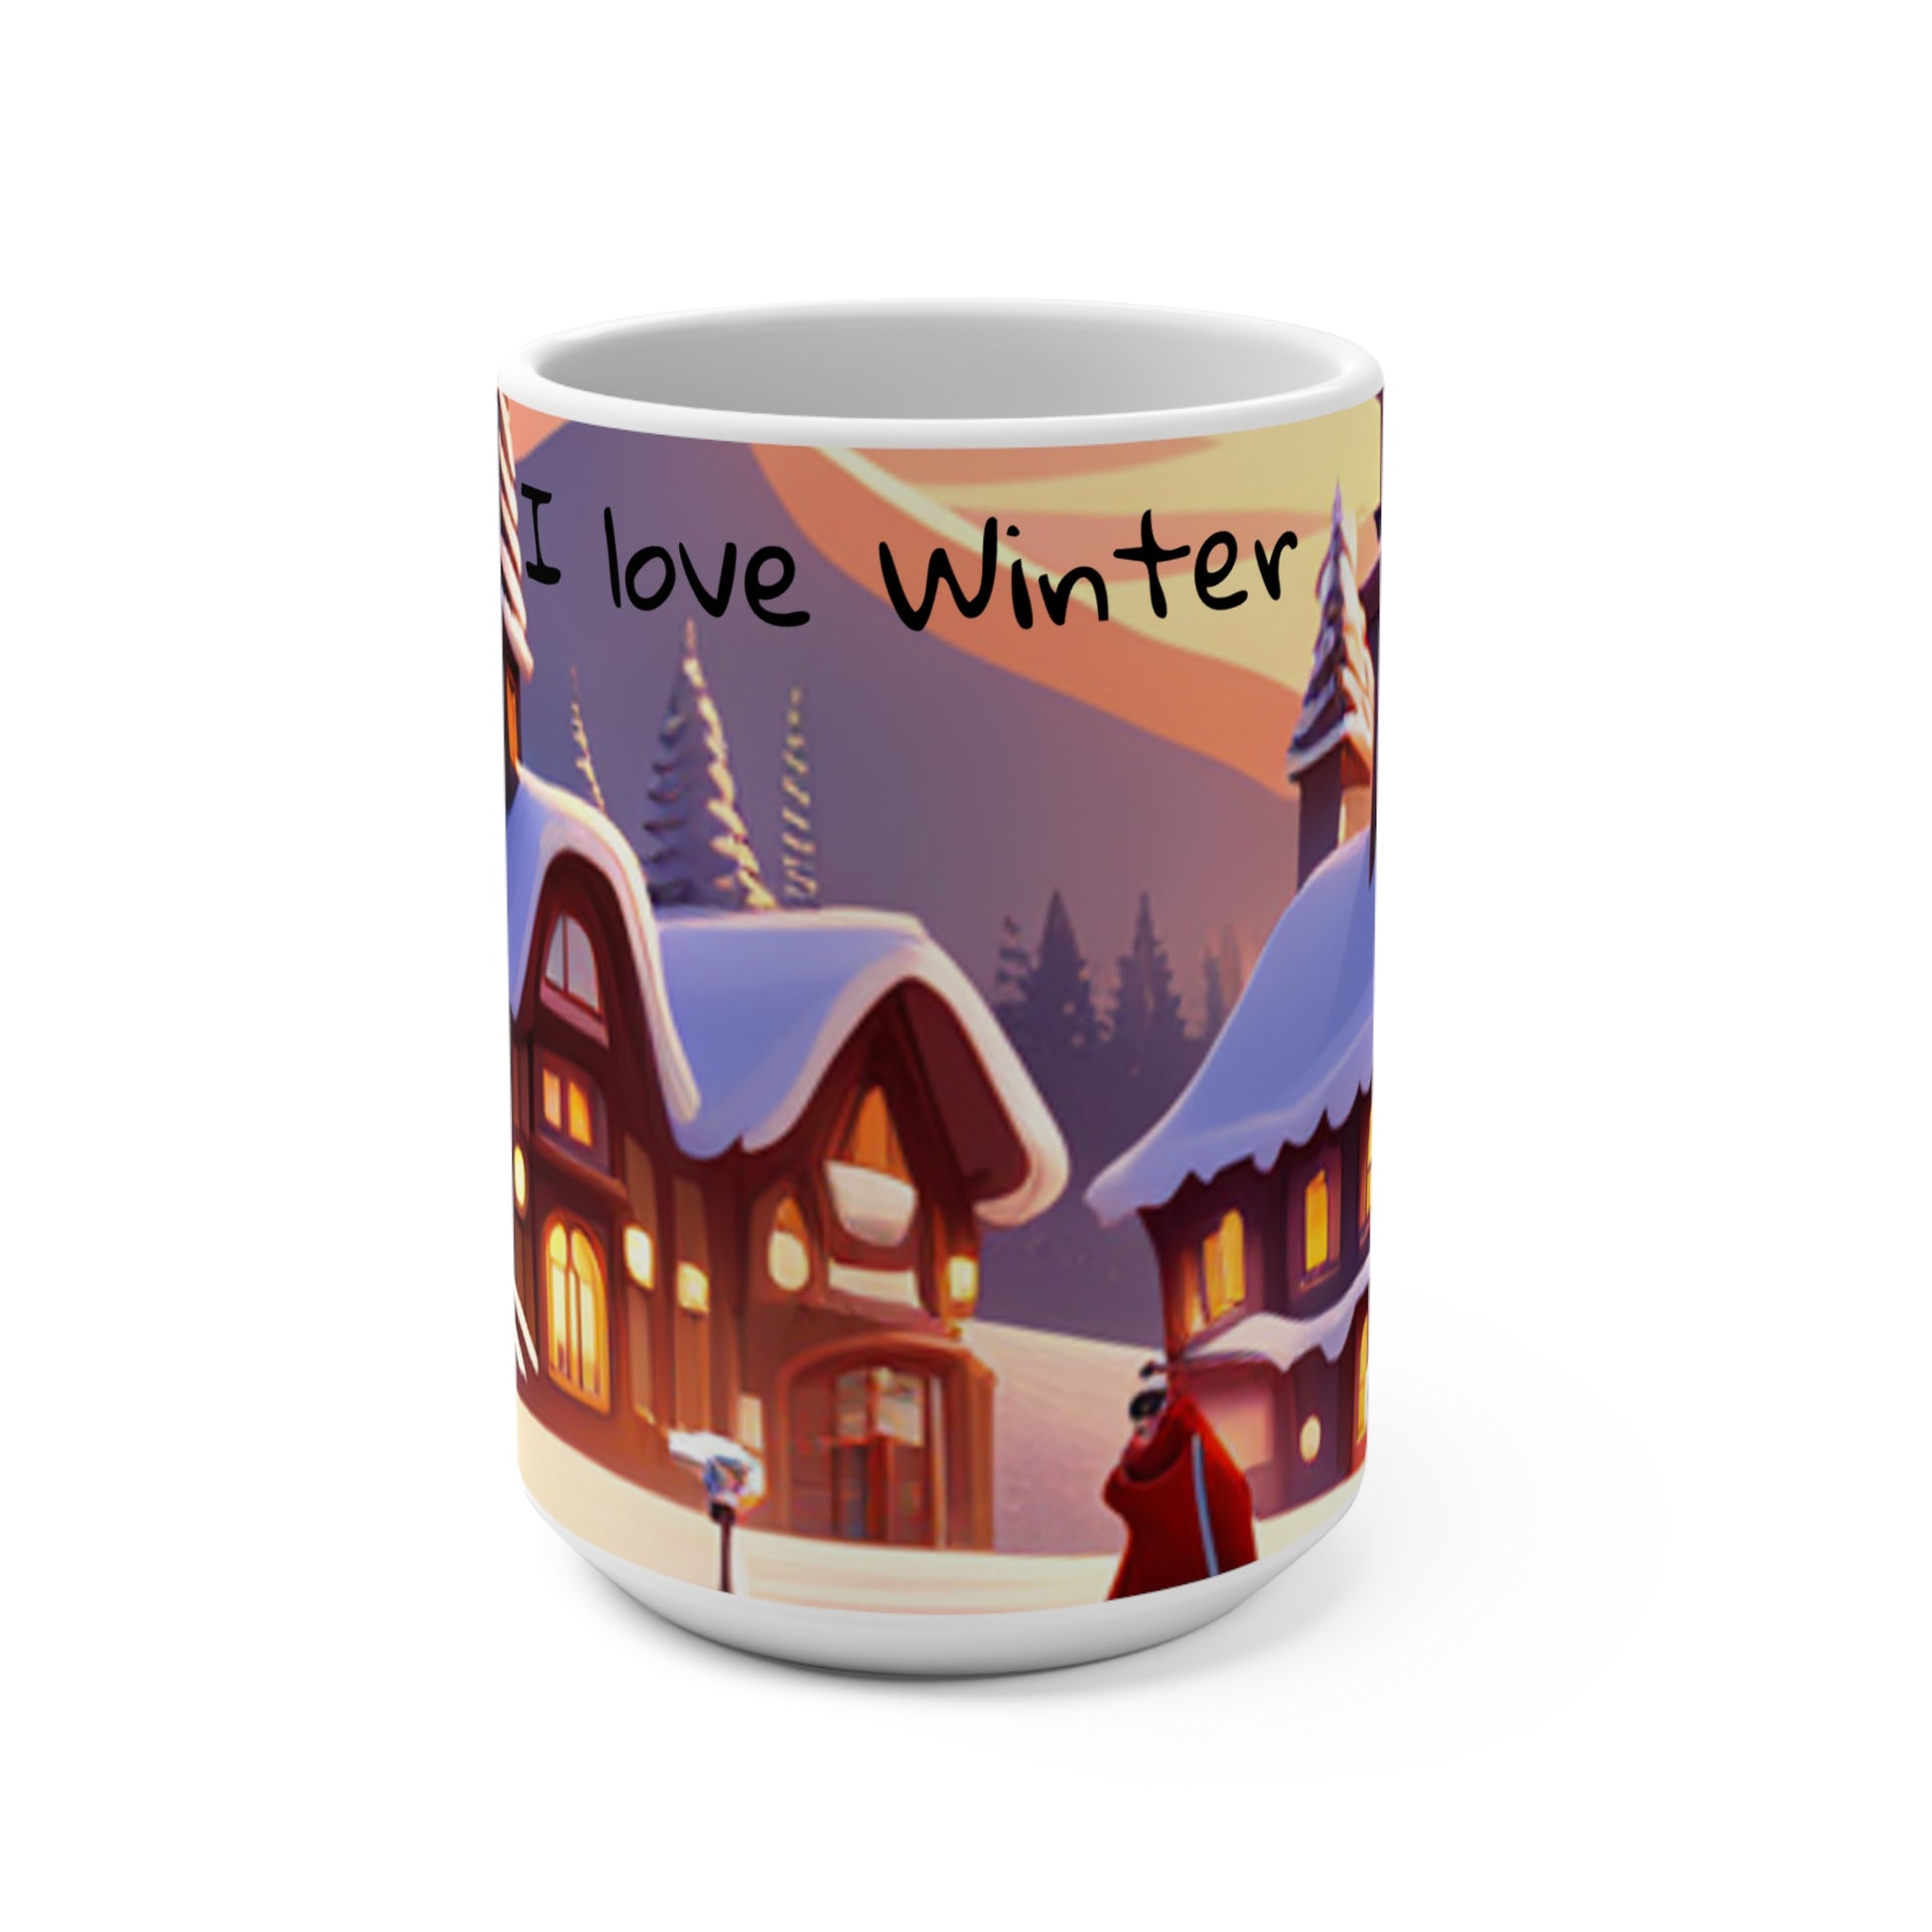 "I love winter" written above a wintery village scene.